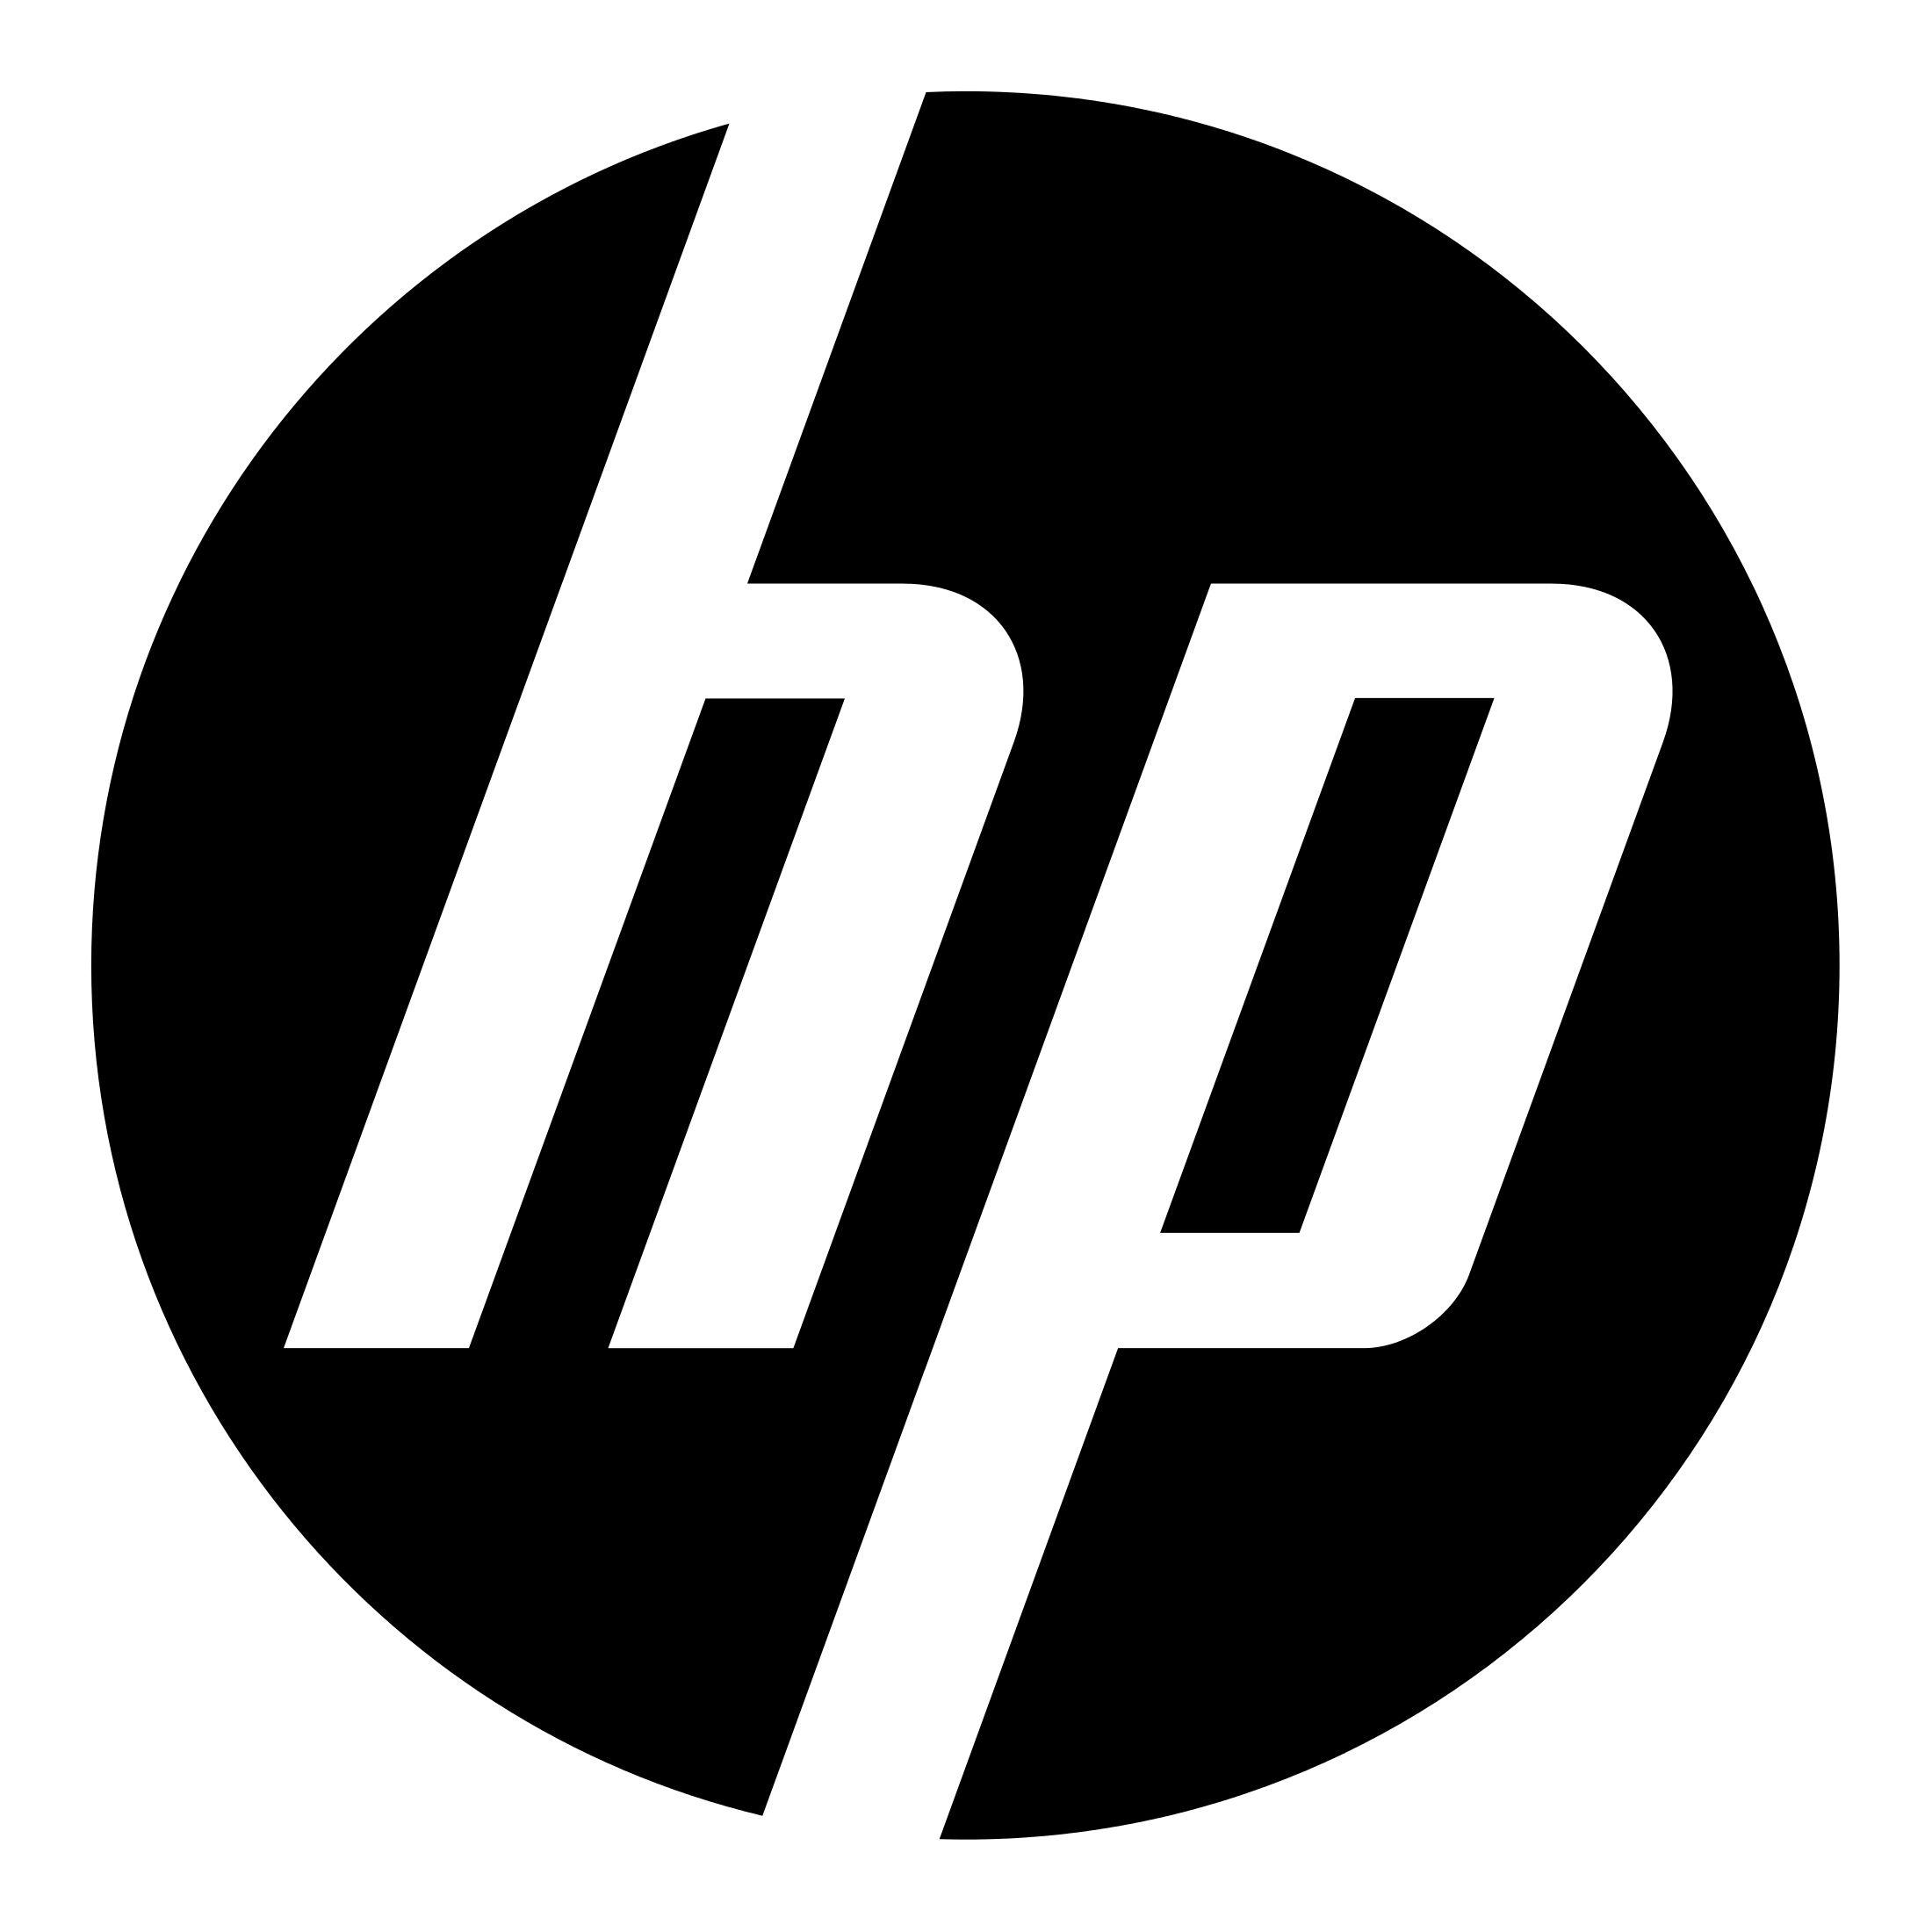 New Hewlett Packard Logo - HP Logo, Hewlett Packard Symbol Meaning, History And Evolution